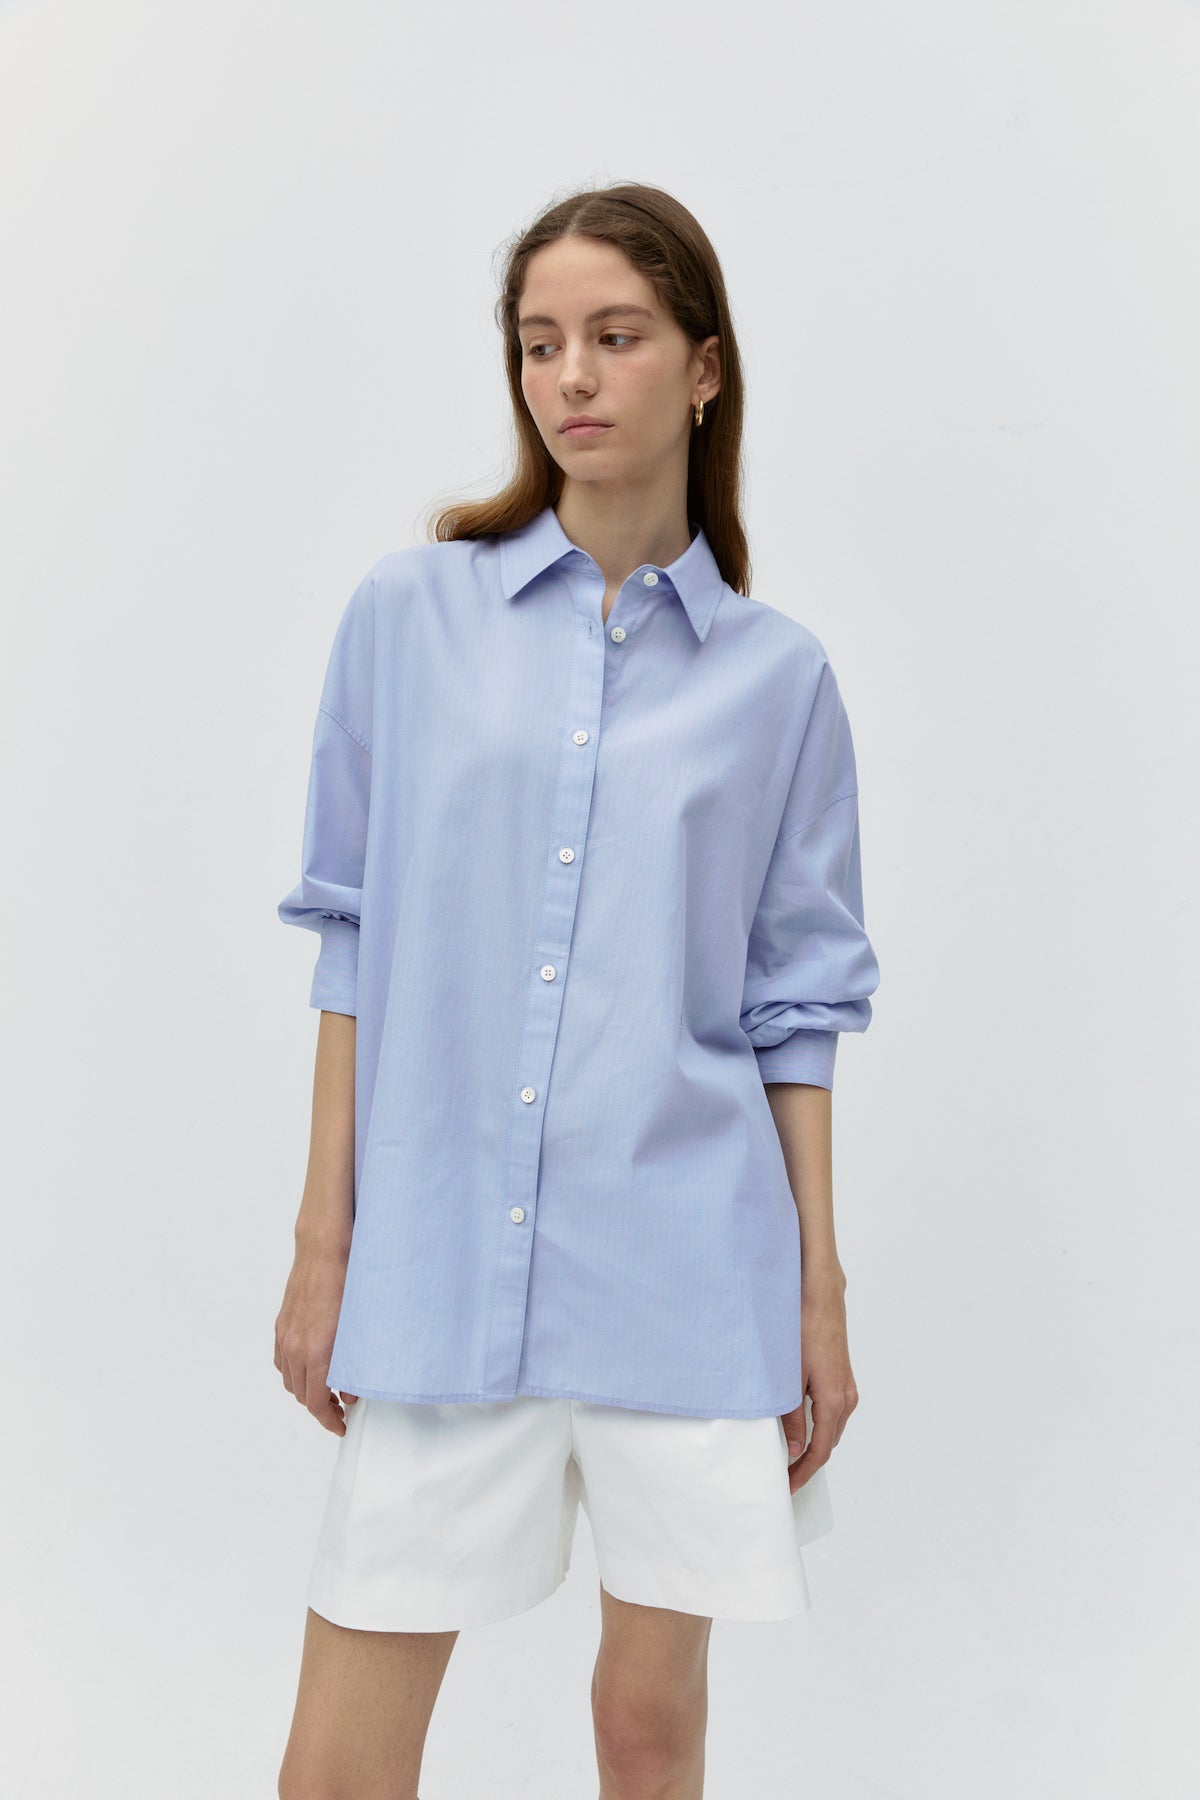 Cotton Stripe Shirts In Blue